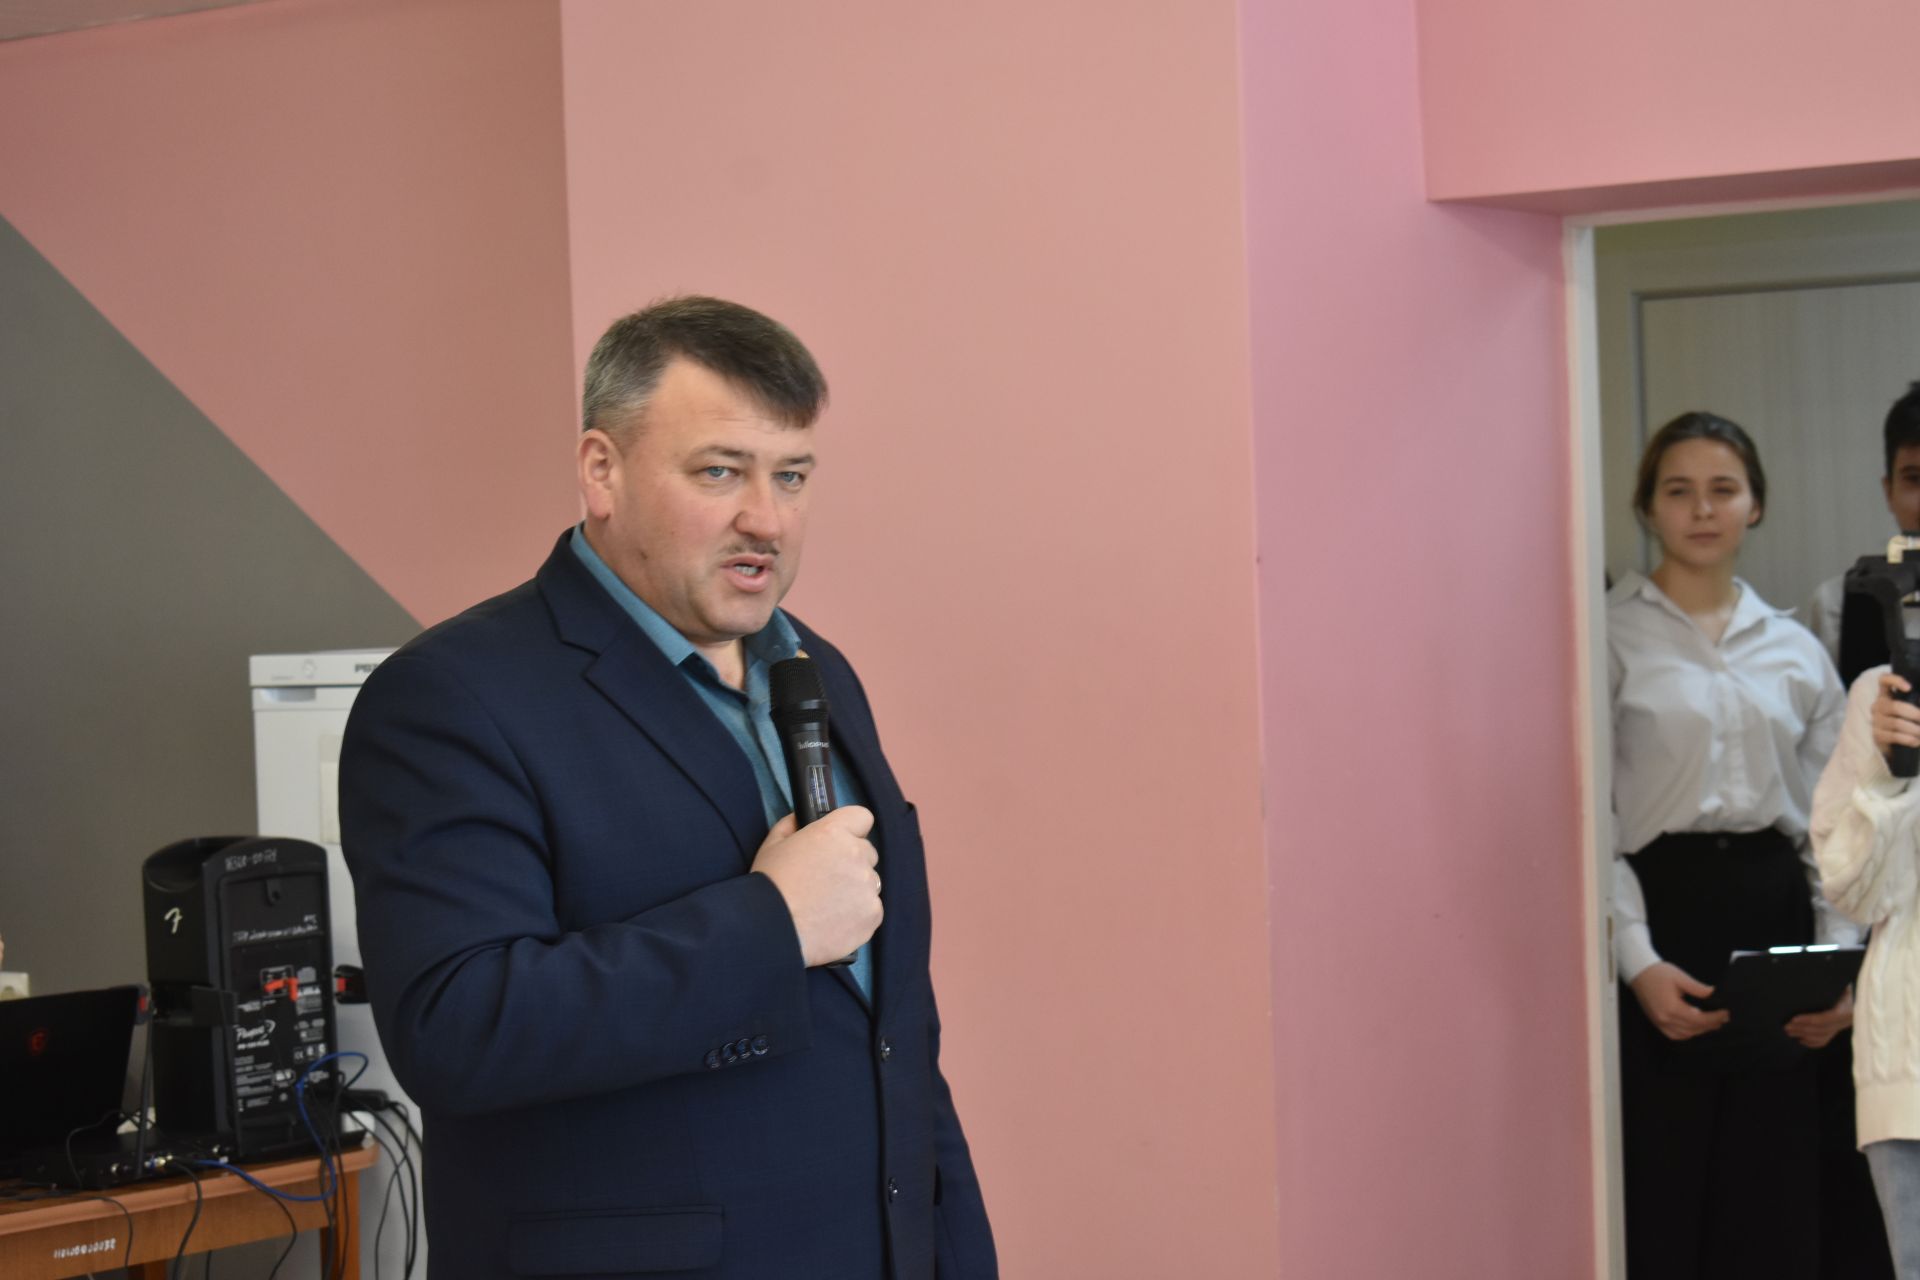 Глава Кайбицкого района поздравил жителей дома-интерната с праздником 8 марта